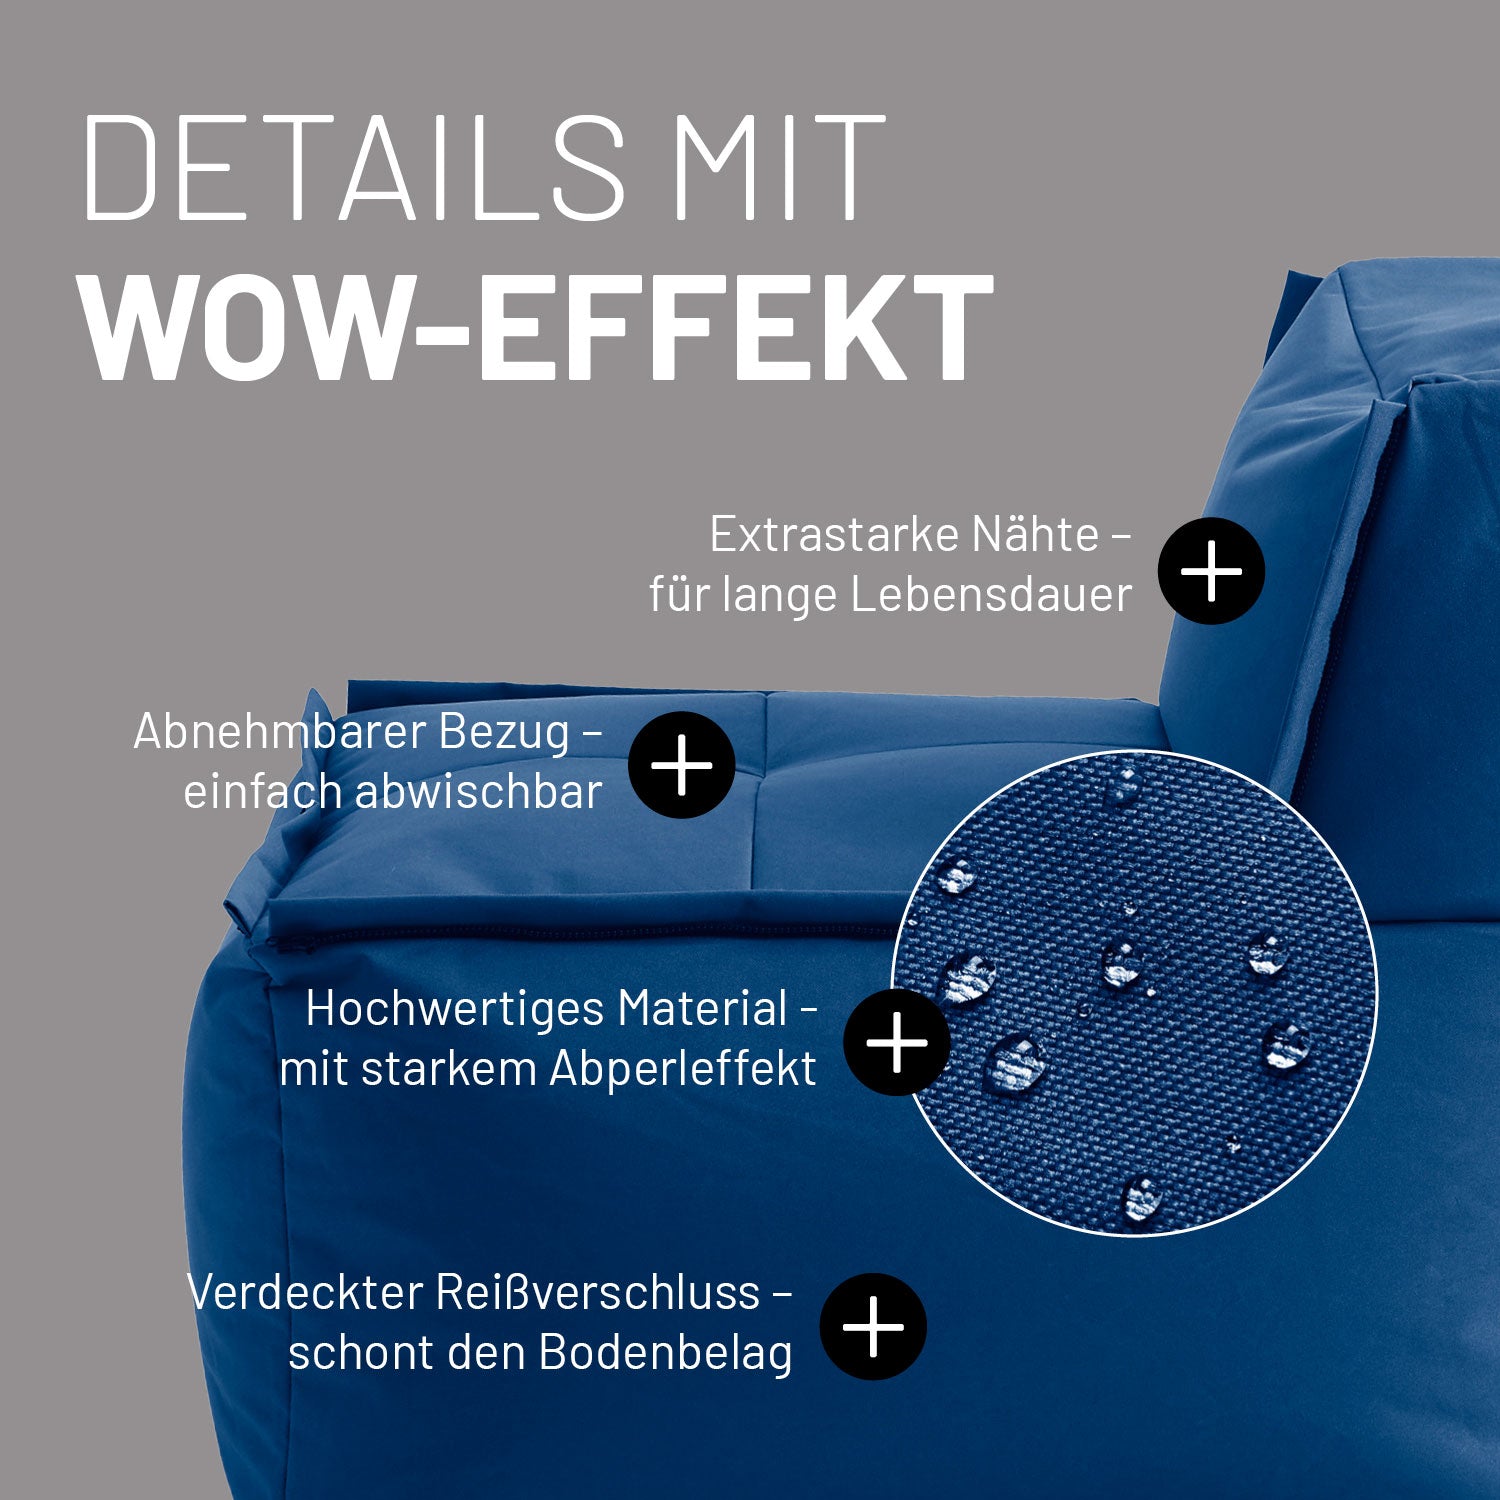 Sitzsack-Sofa Mittelstück (200 L) - Modulares System - indoor & outdoor - Navyblau